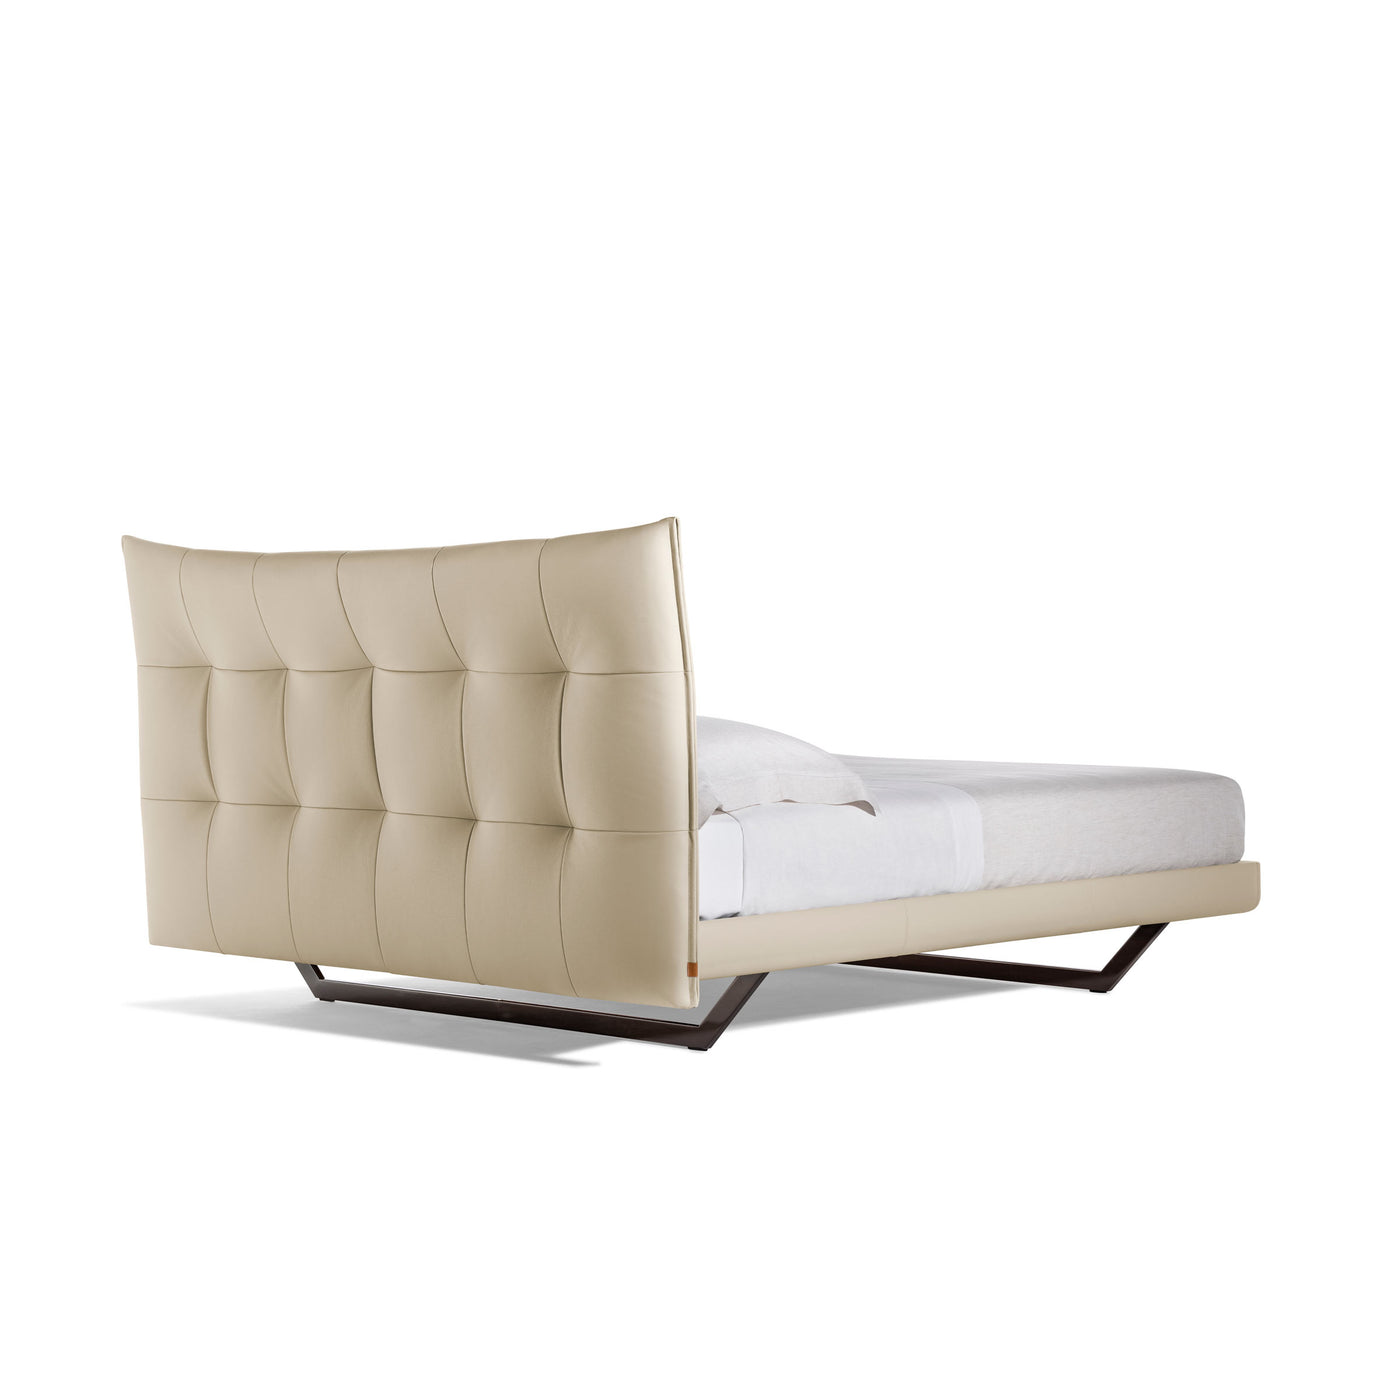 Leather Bed AURORA TRE by Tito Agnoli for Poltrona Frau 09